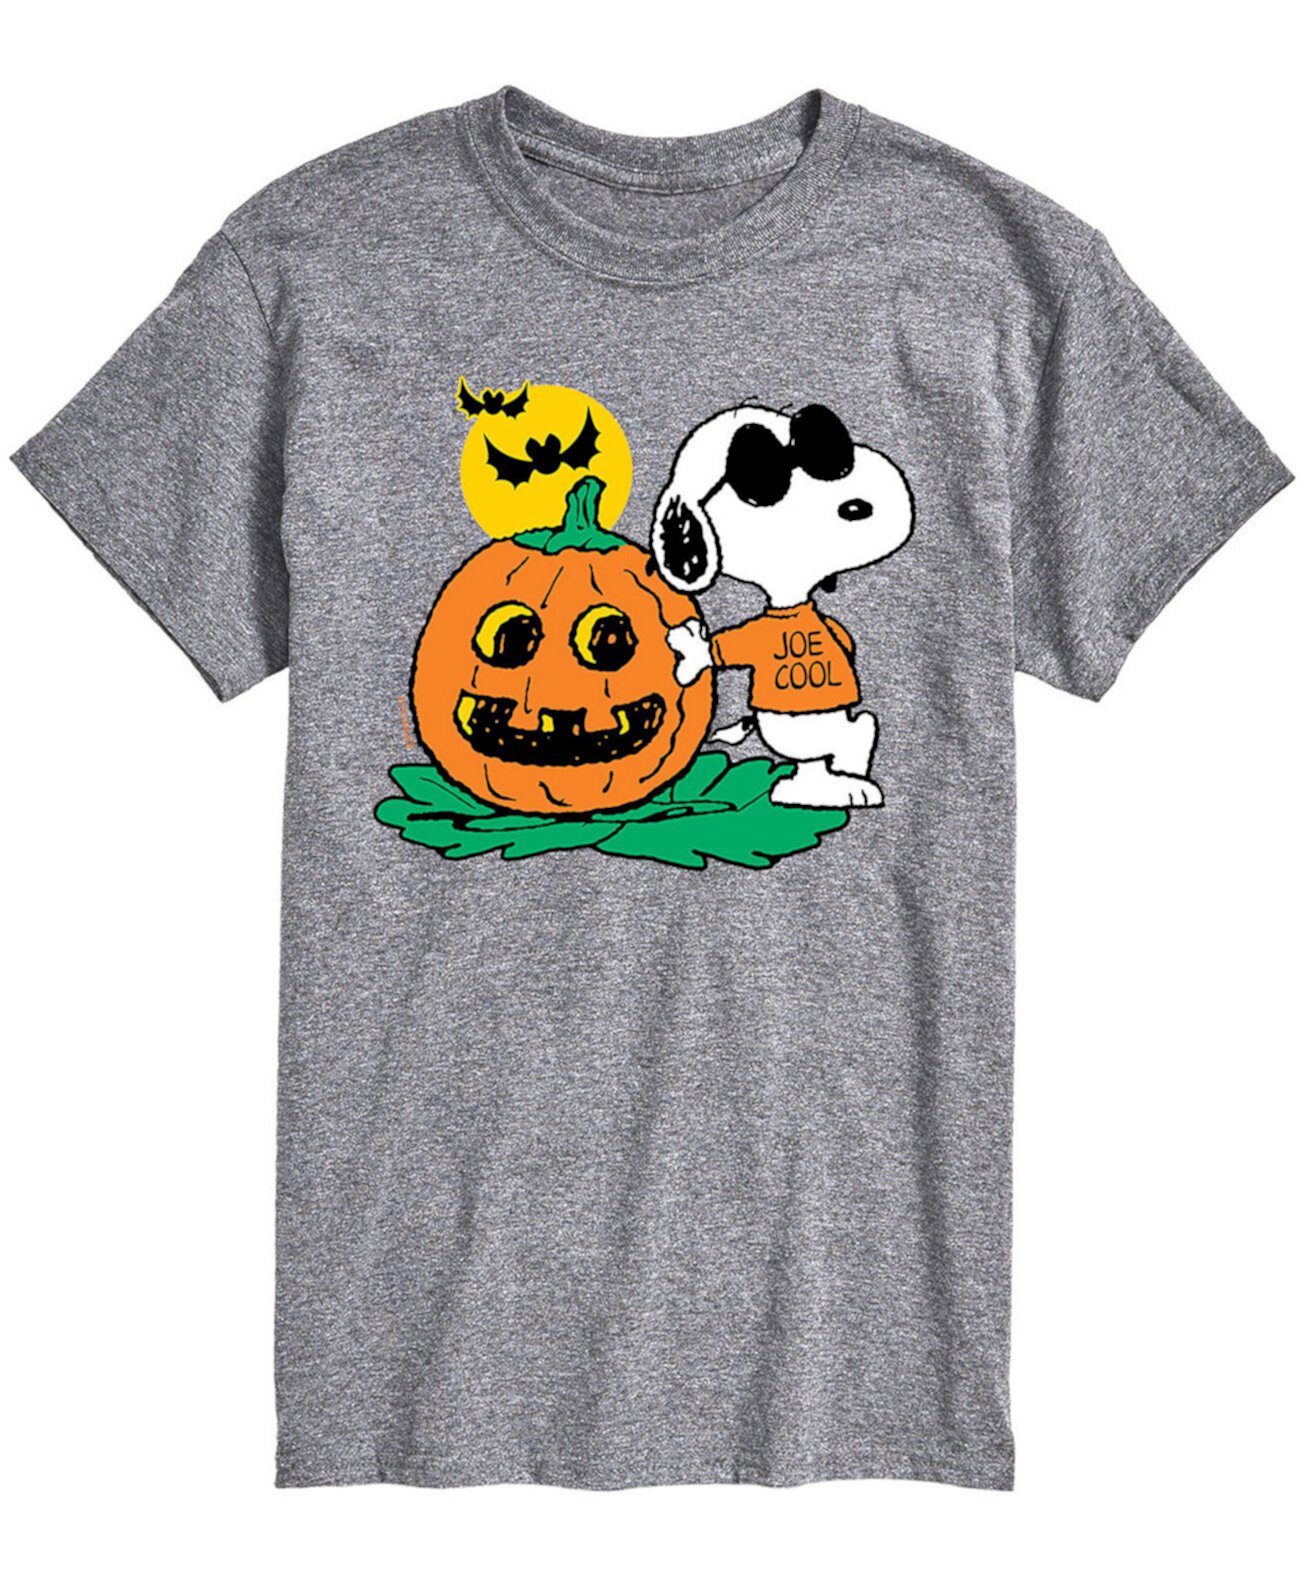 Мужская футболка Peanuts Joe Cool Pumpkin AIRWAVES